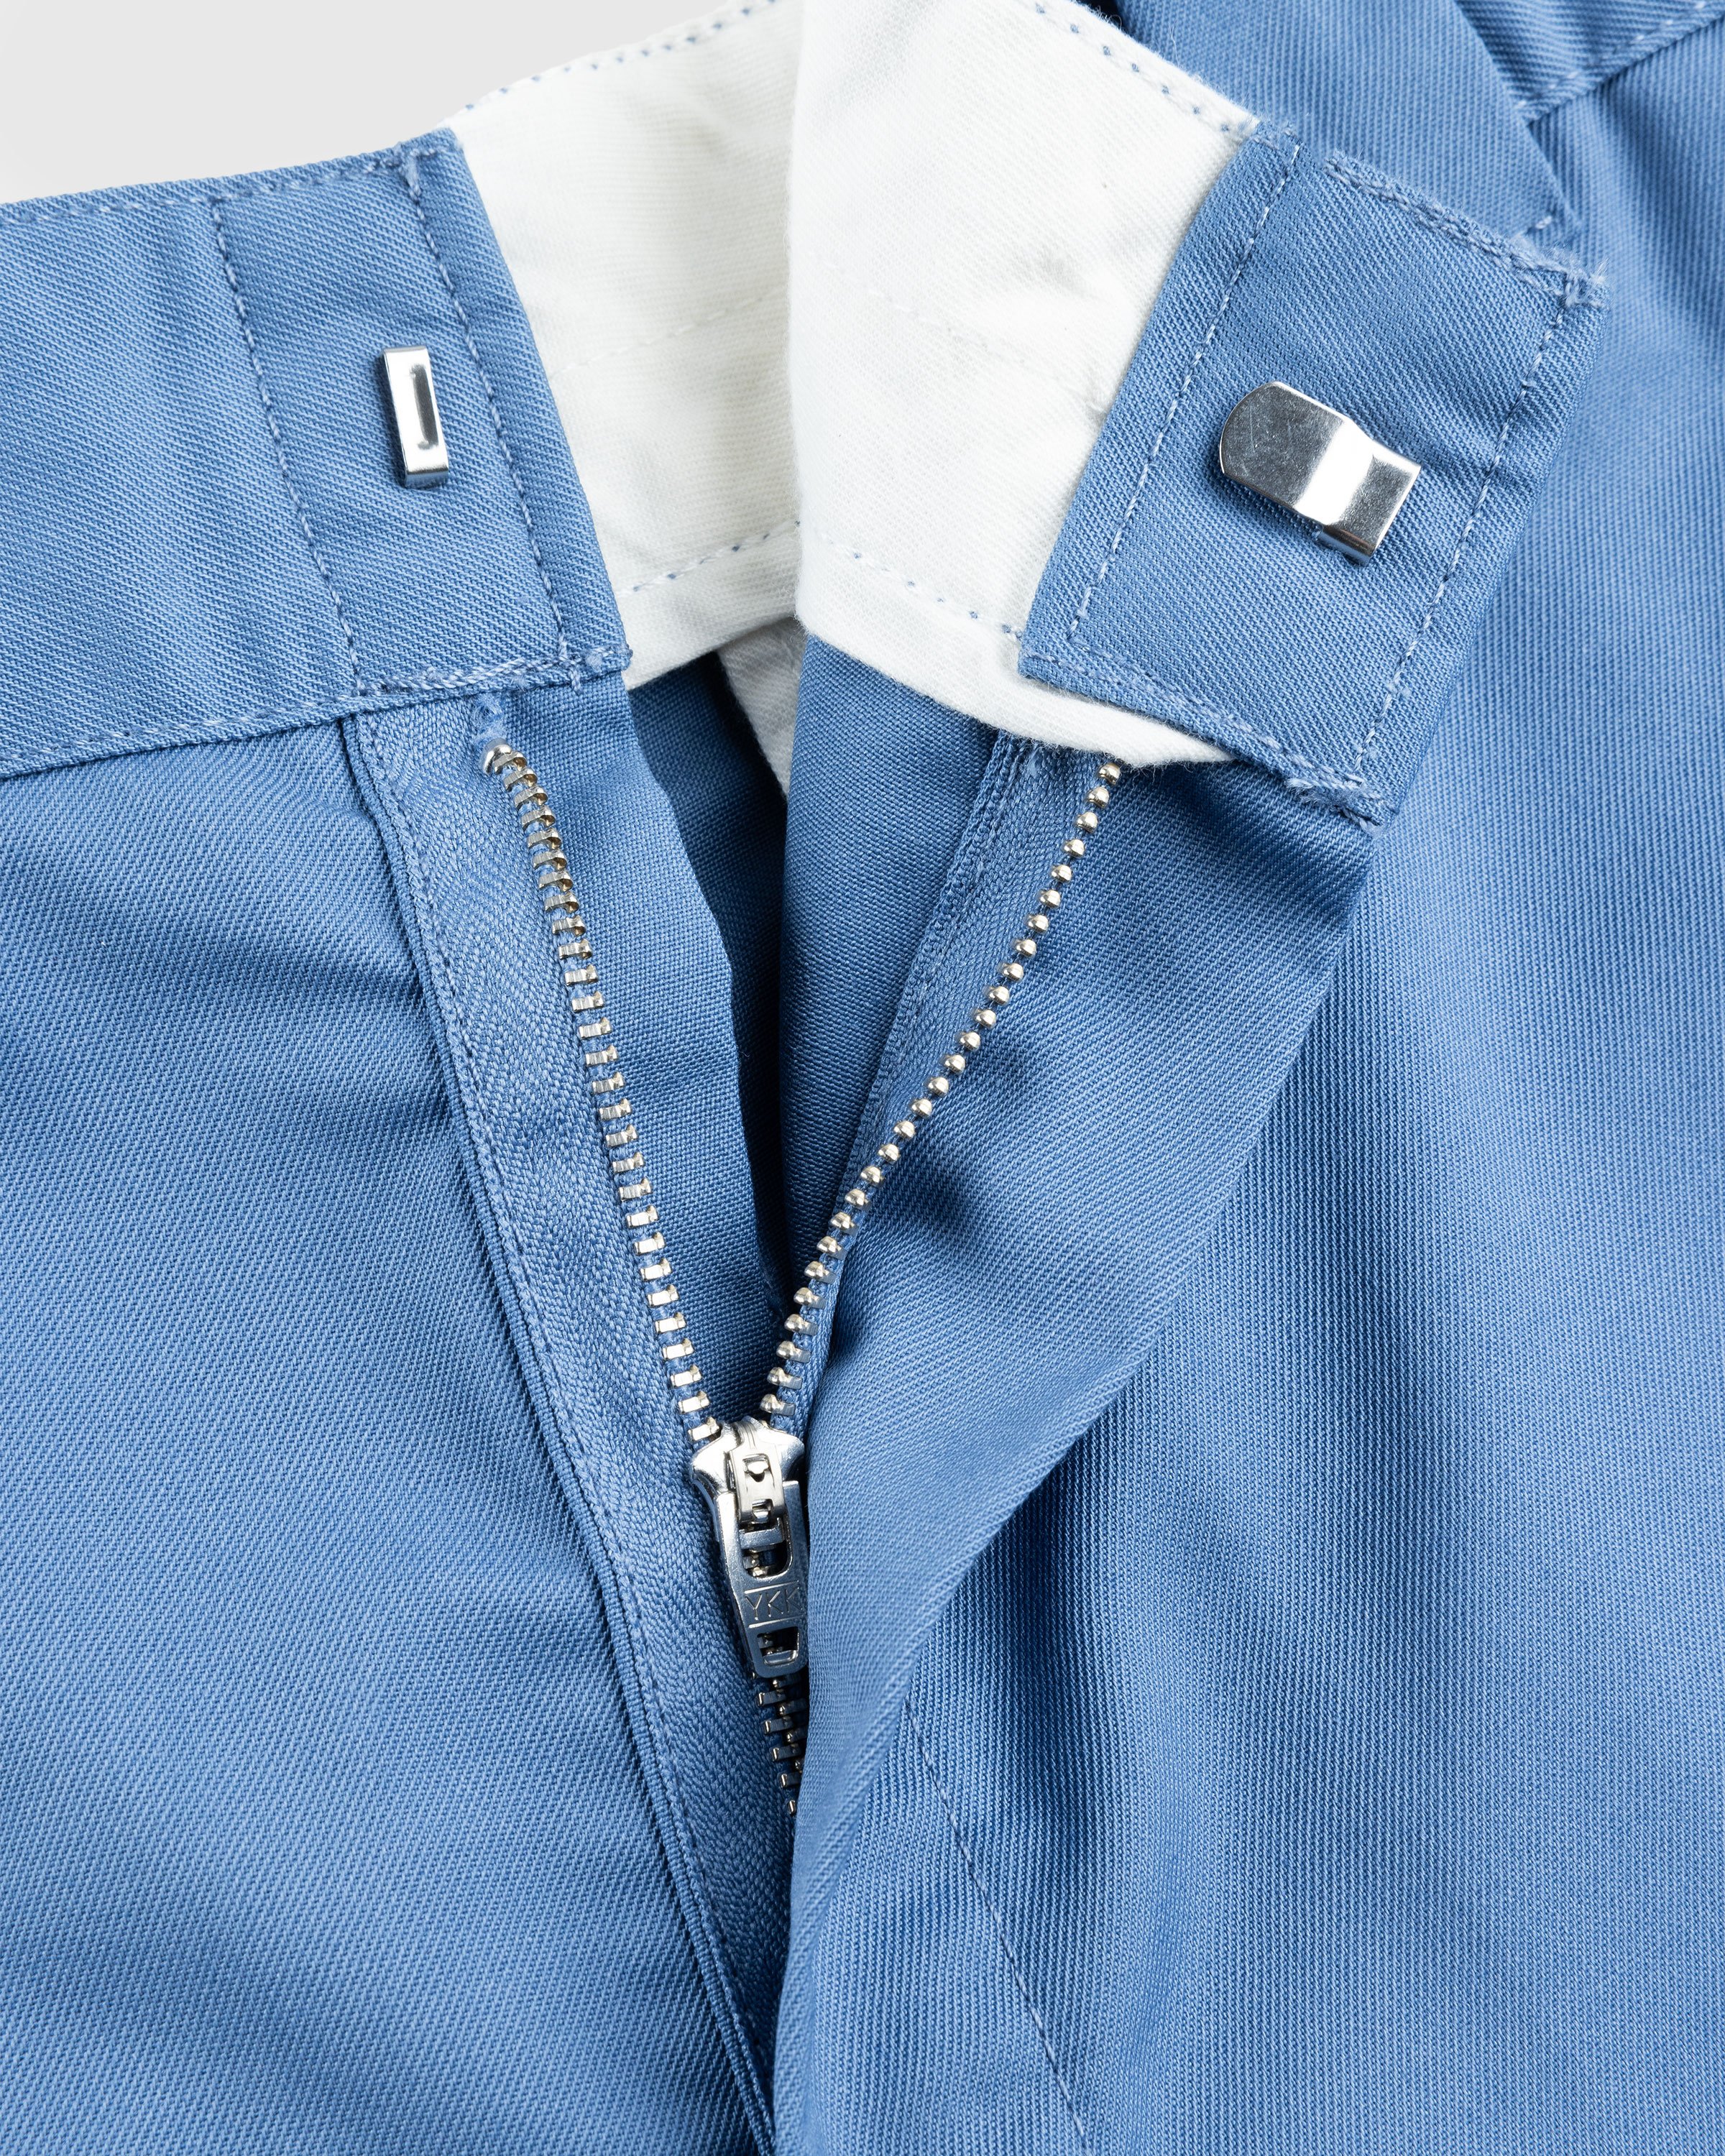 Carhartt WIP - Craft Short Sorrent /rinsed - Clothing - Blue - Image 7